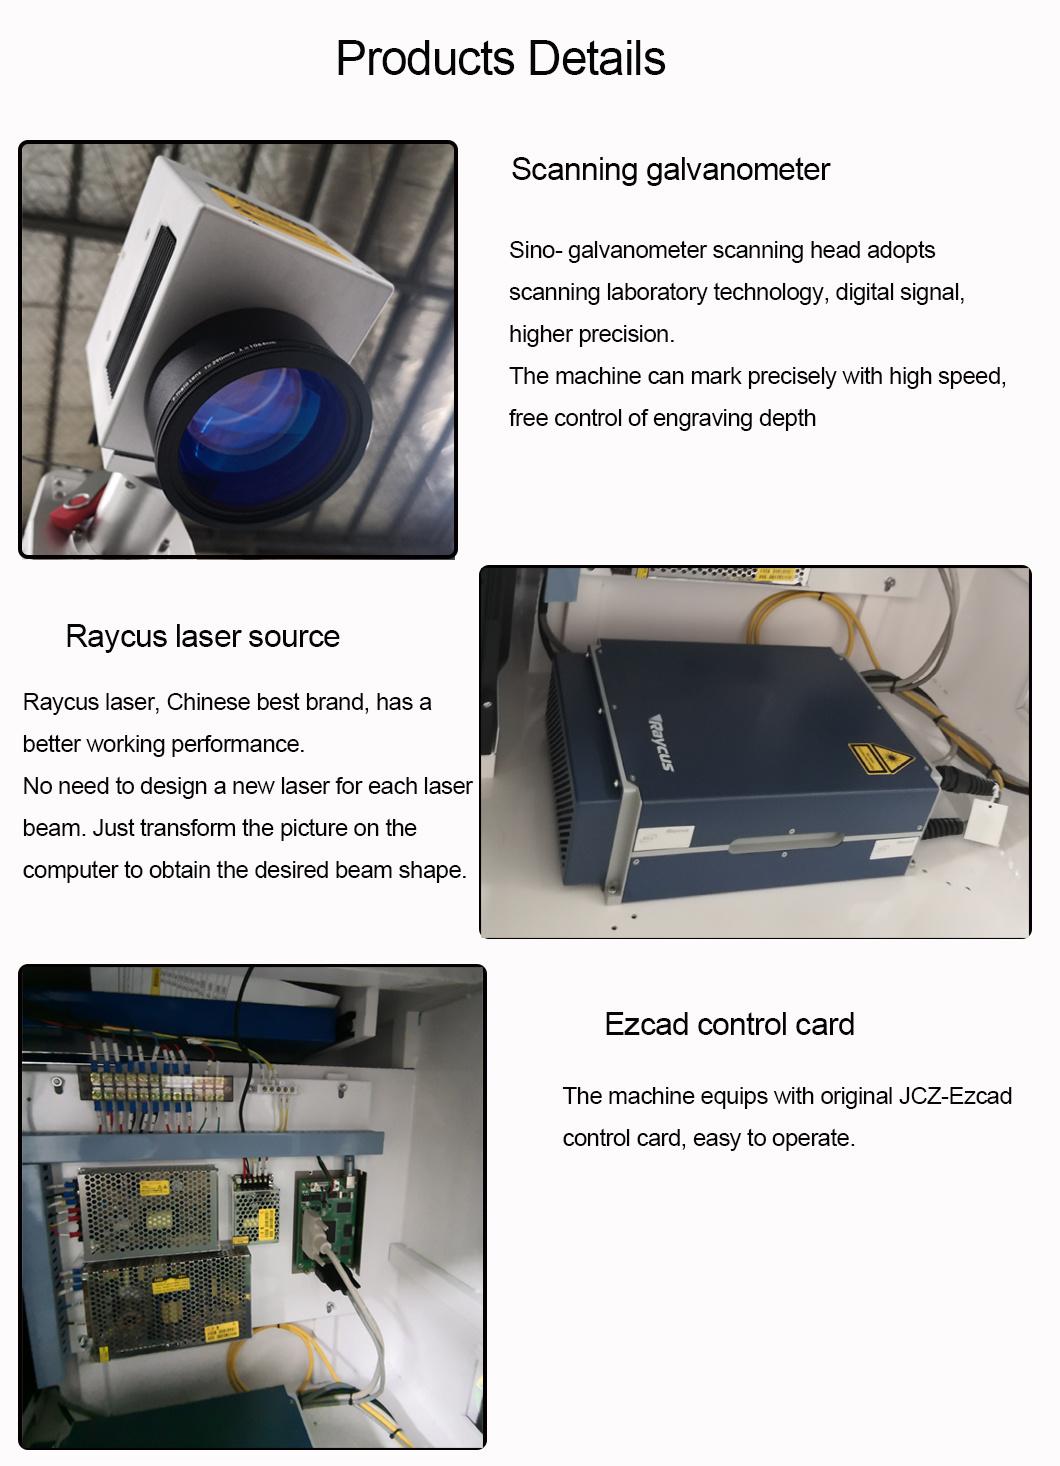 Engrave Metal and Various Non-Metallic Materials Fiber Laser Marking Machine